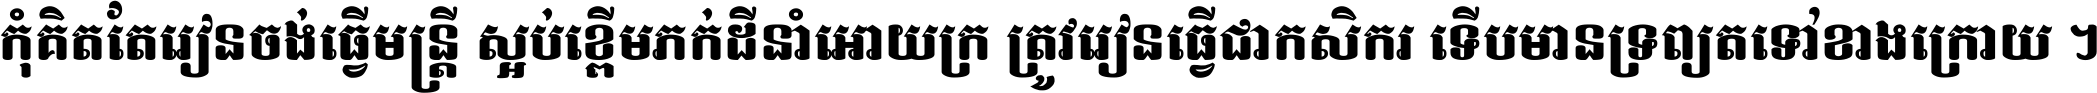 Khmer Chhay Style 8